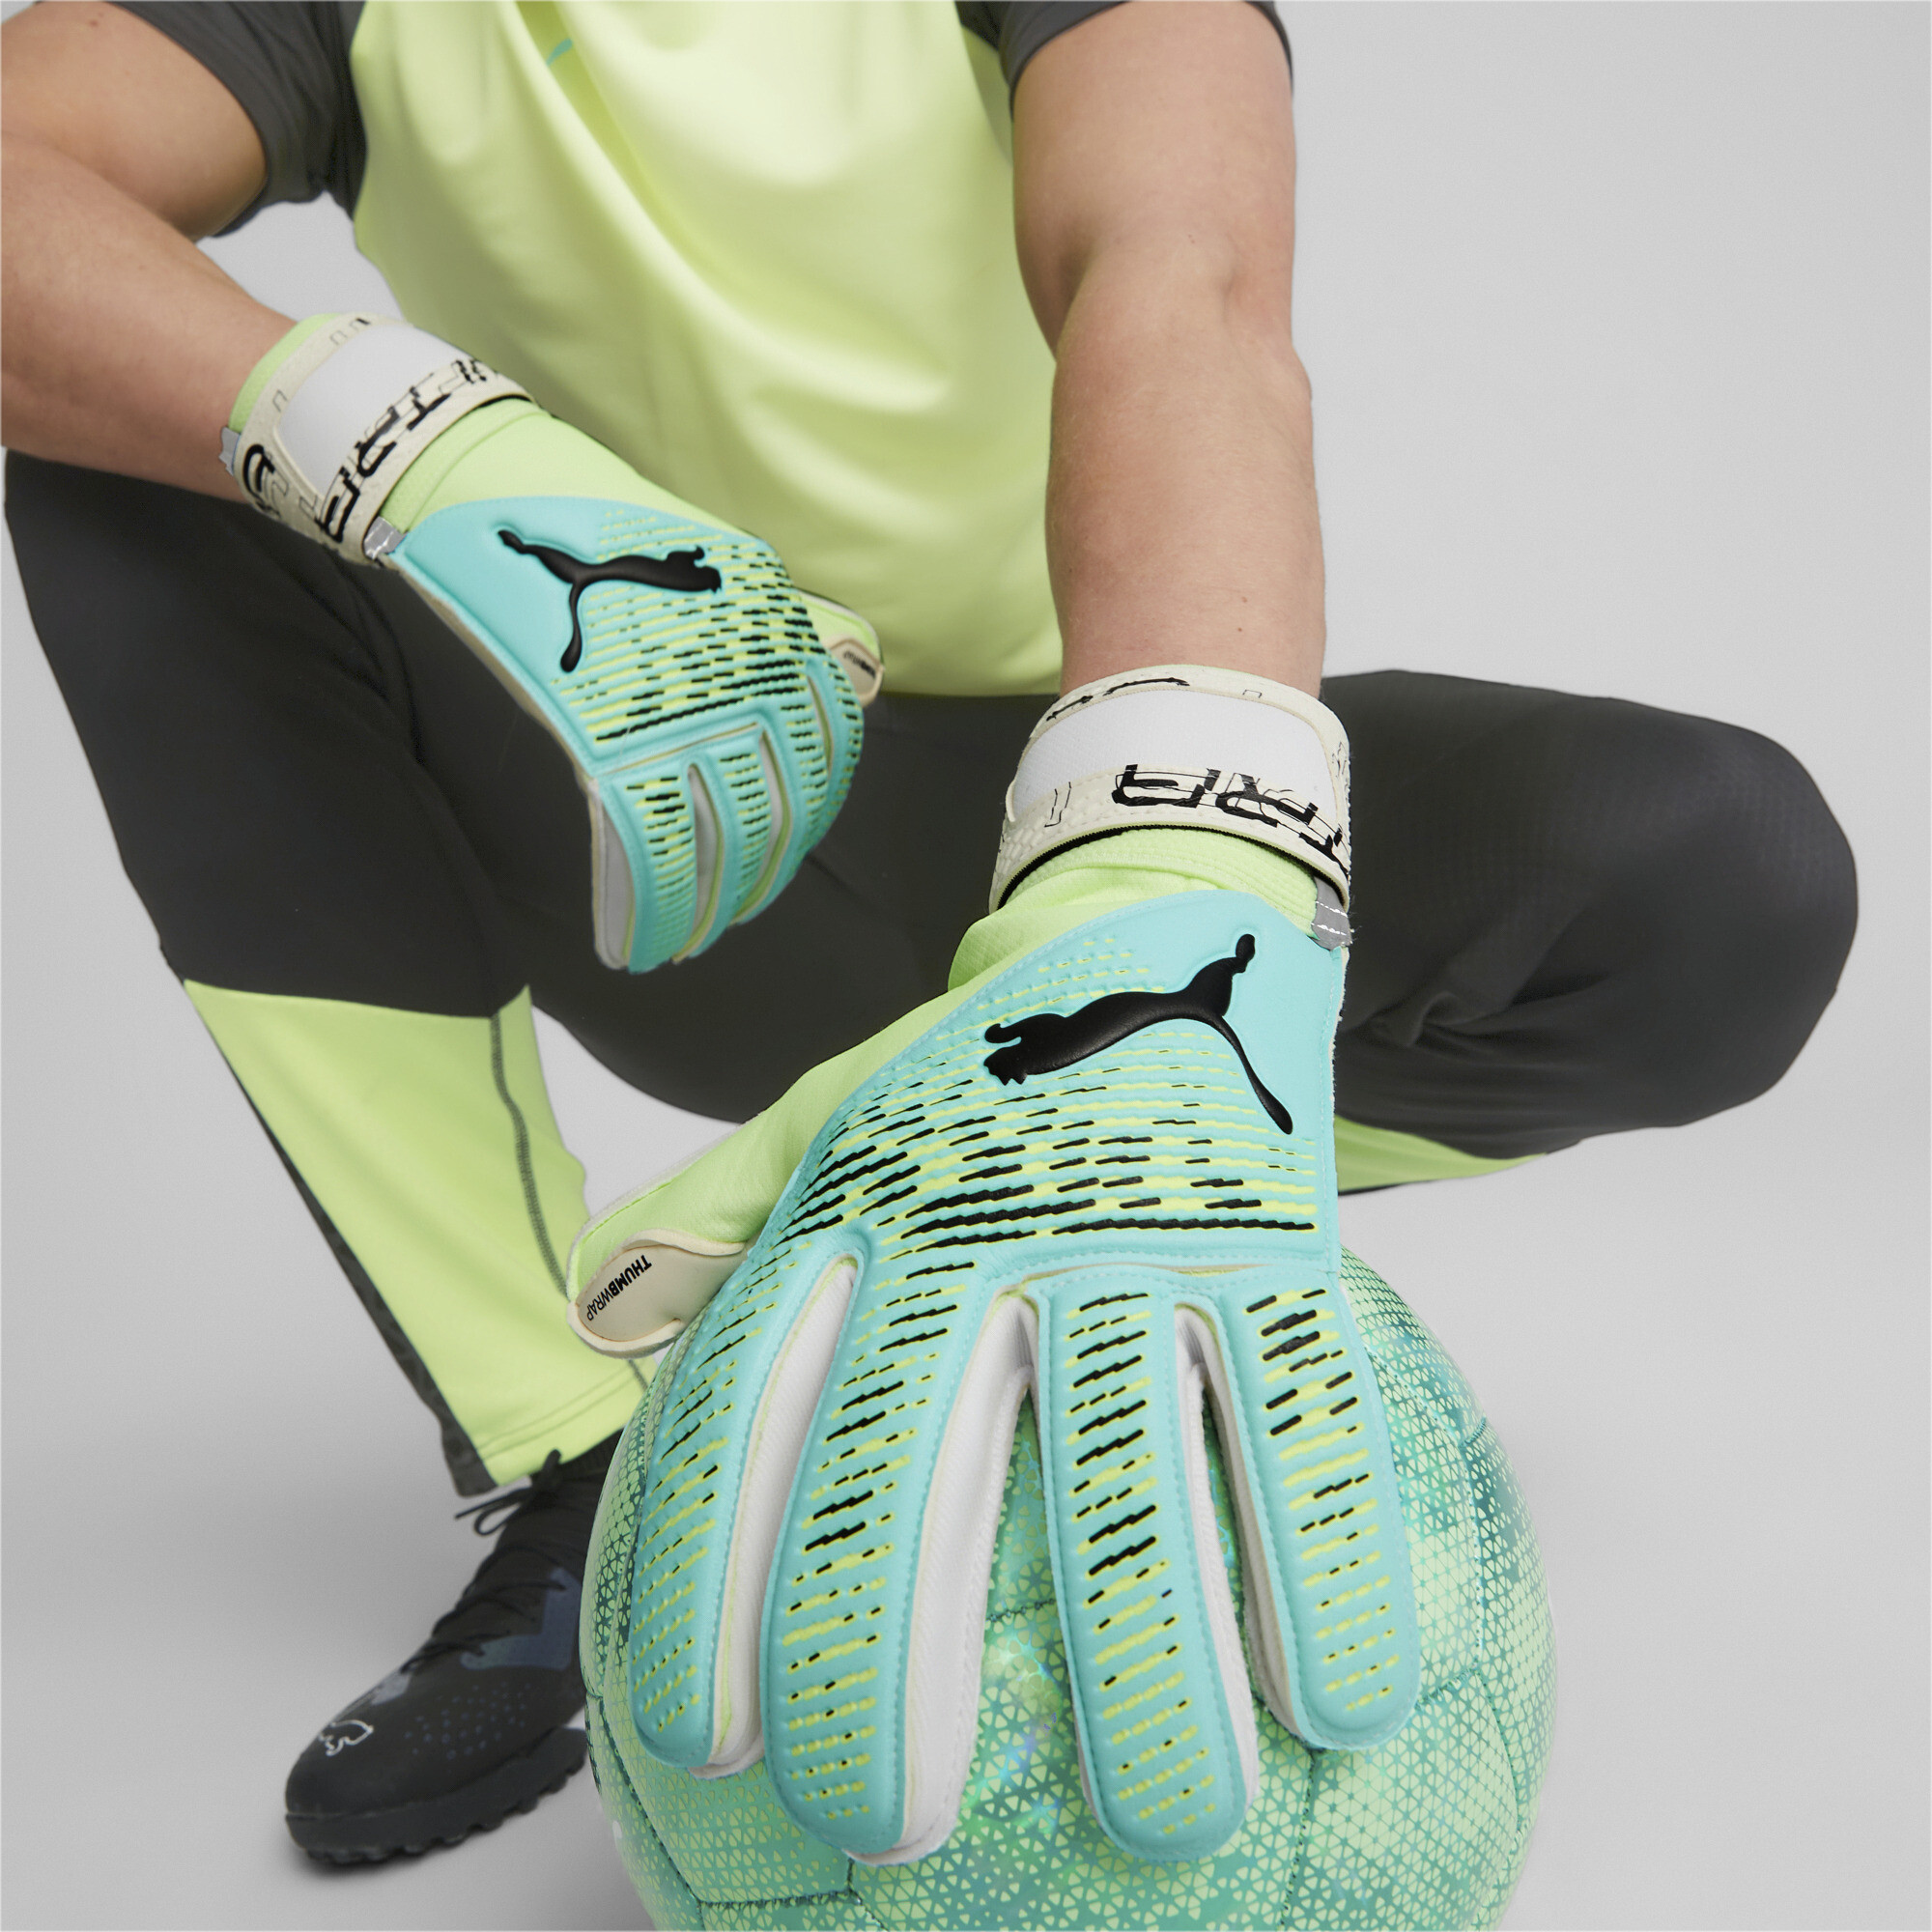 Puma ULTRA Grip 2 RC Goalkeeper Gloves, Green, Size 8.5, Accessories